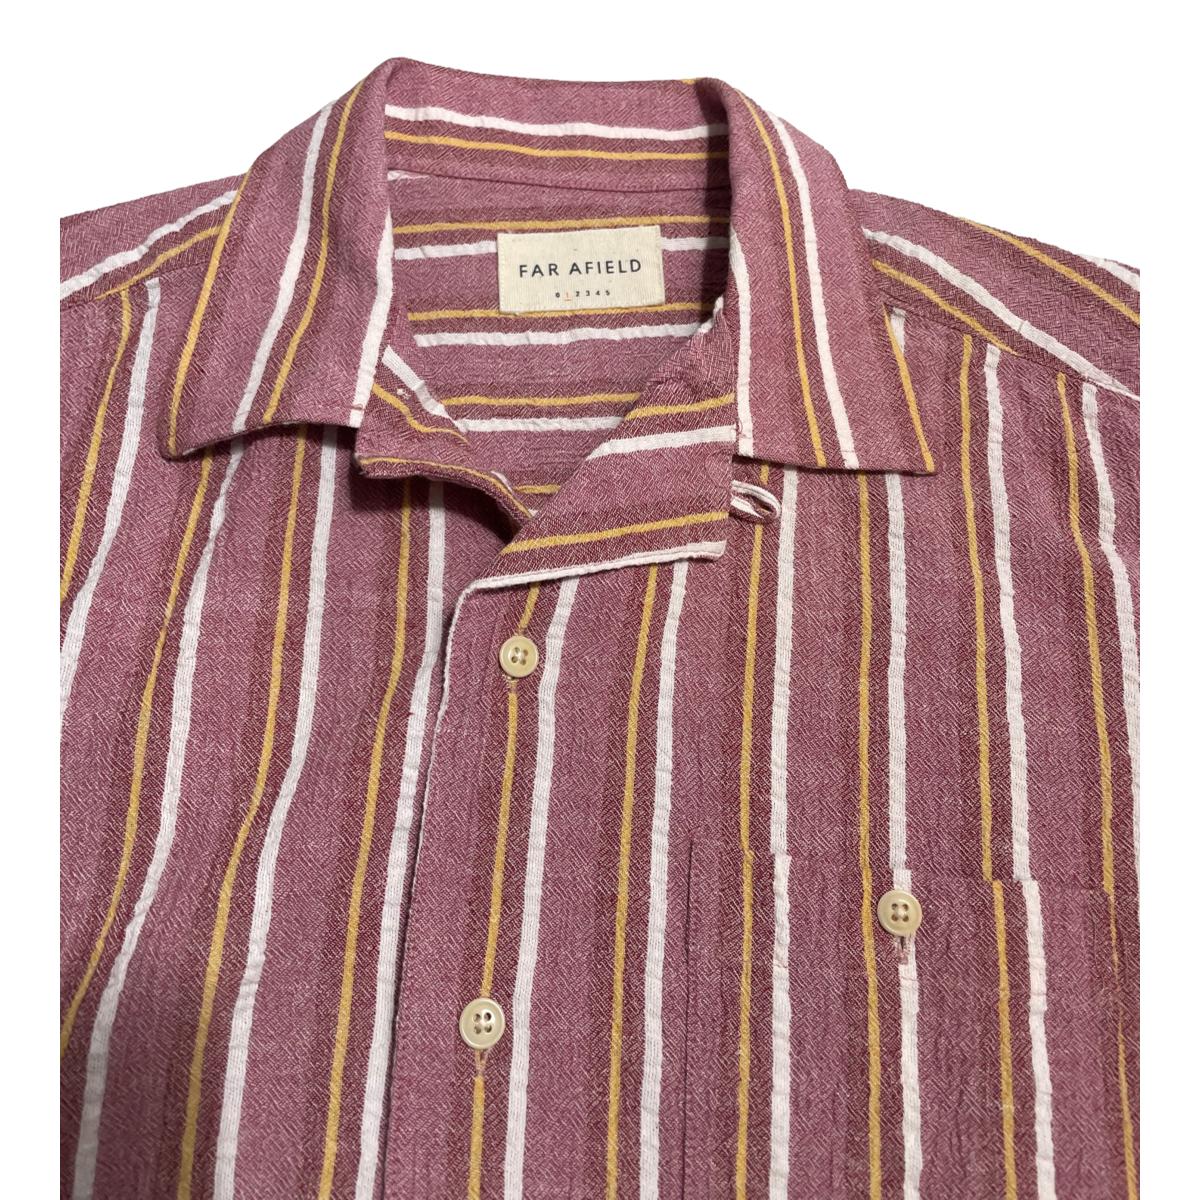 Selleck Shirt Ramsgate Stripe Baroque Rose - Shirts